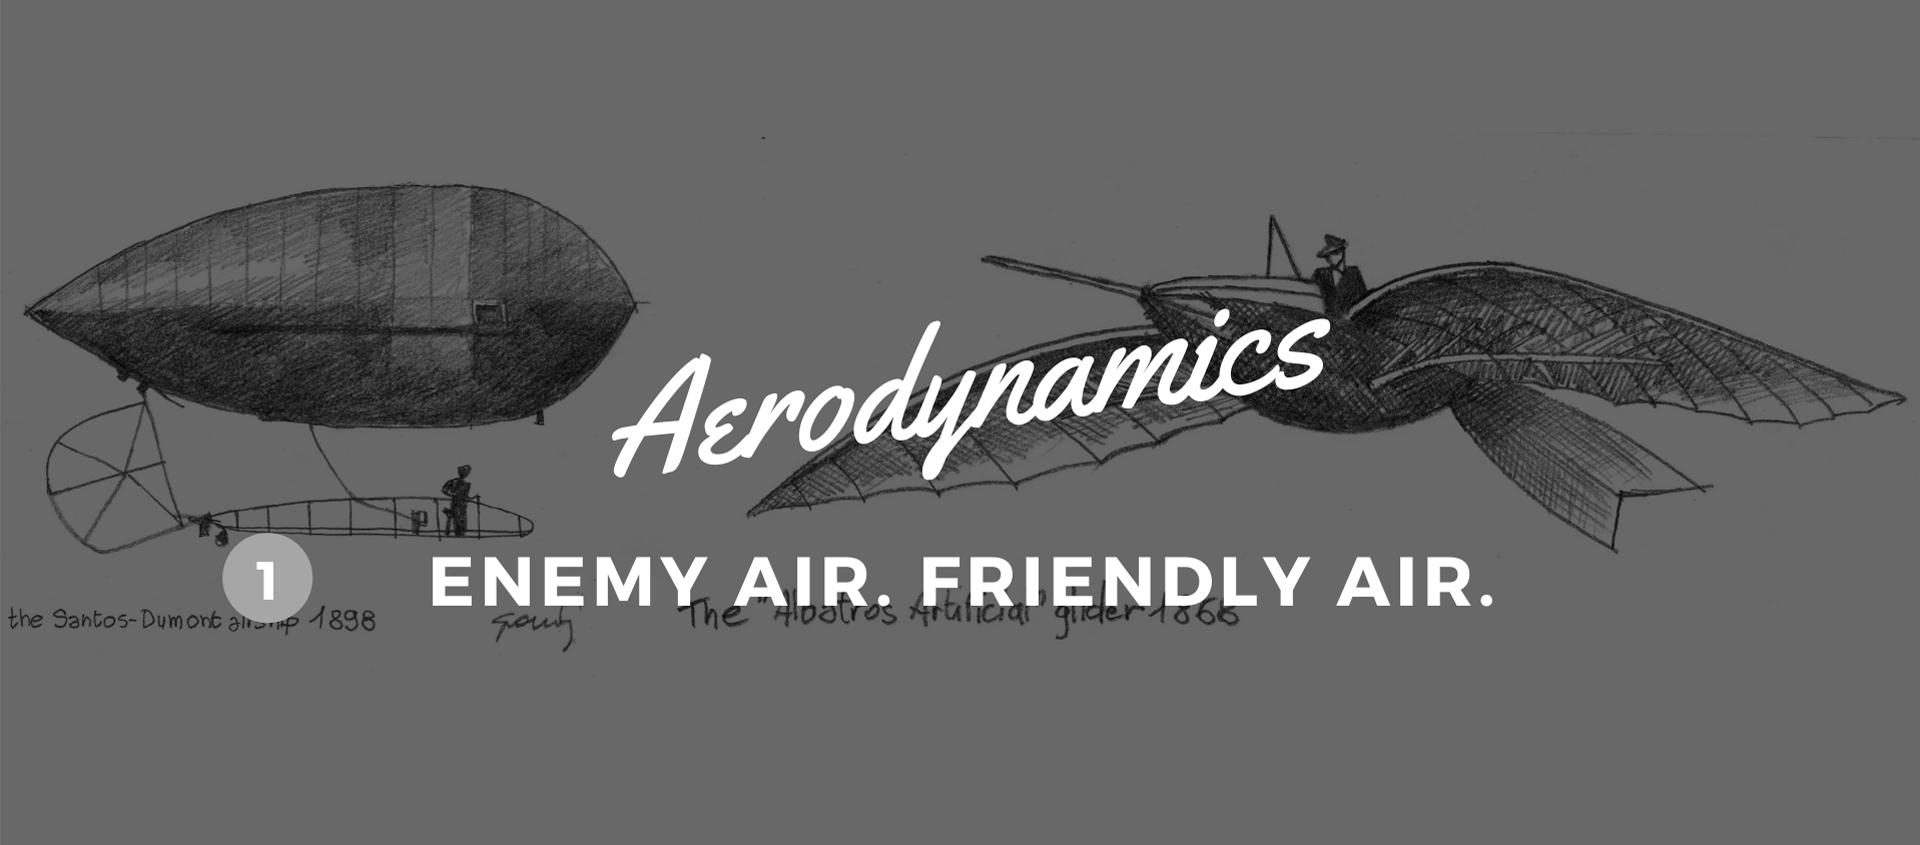 Aerodynamics. Over 100 years of evolution. image